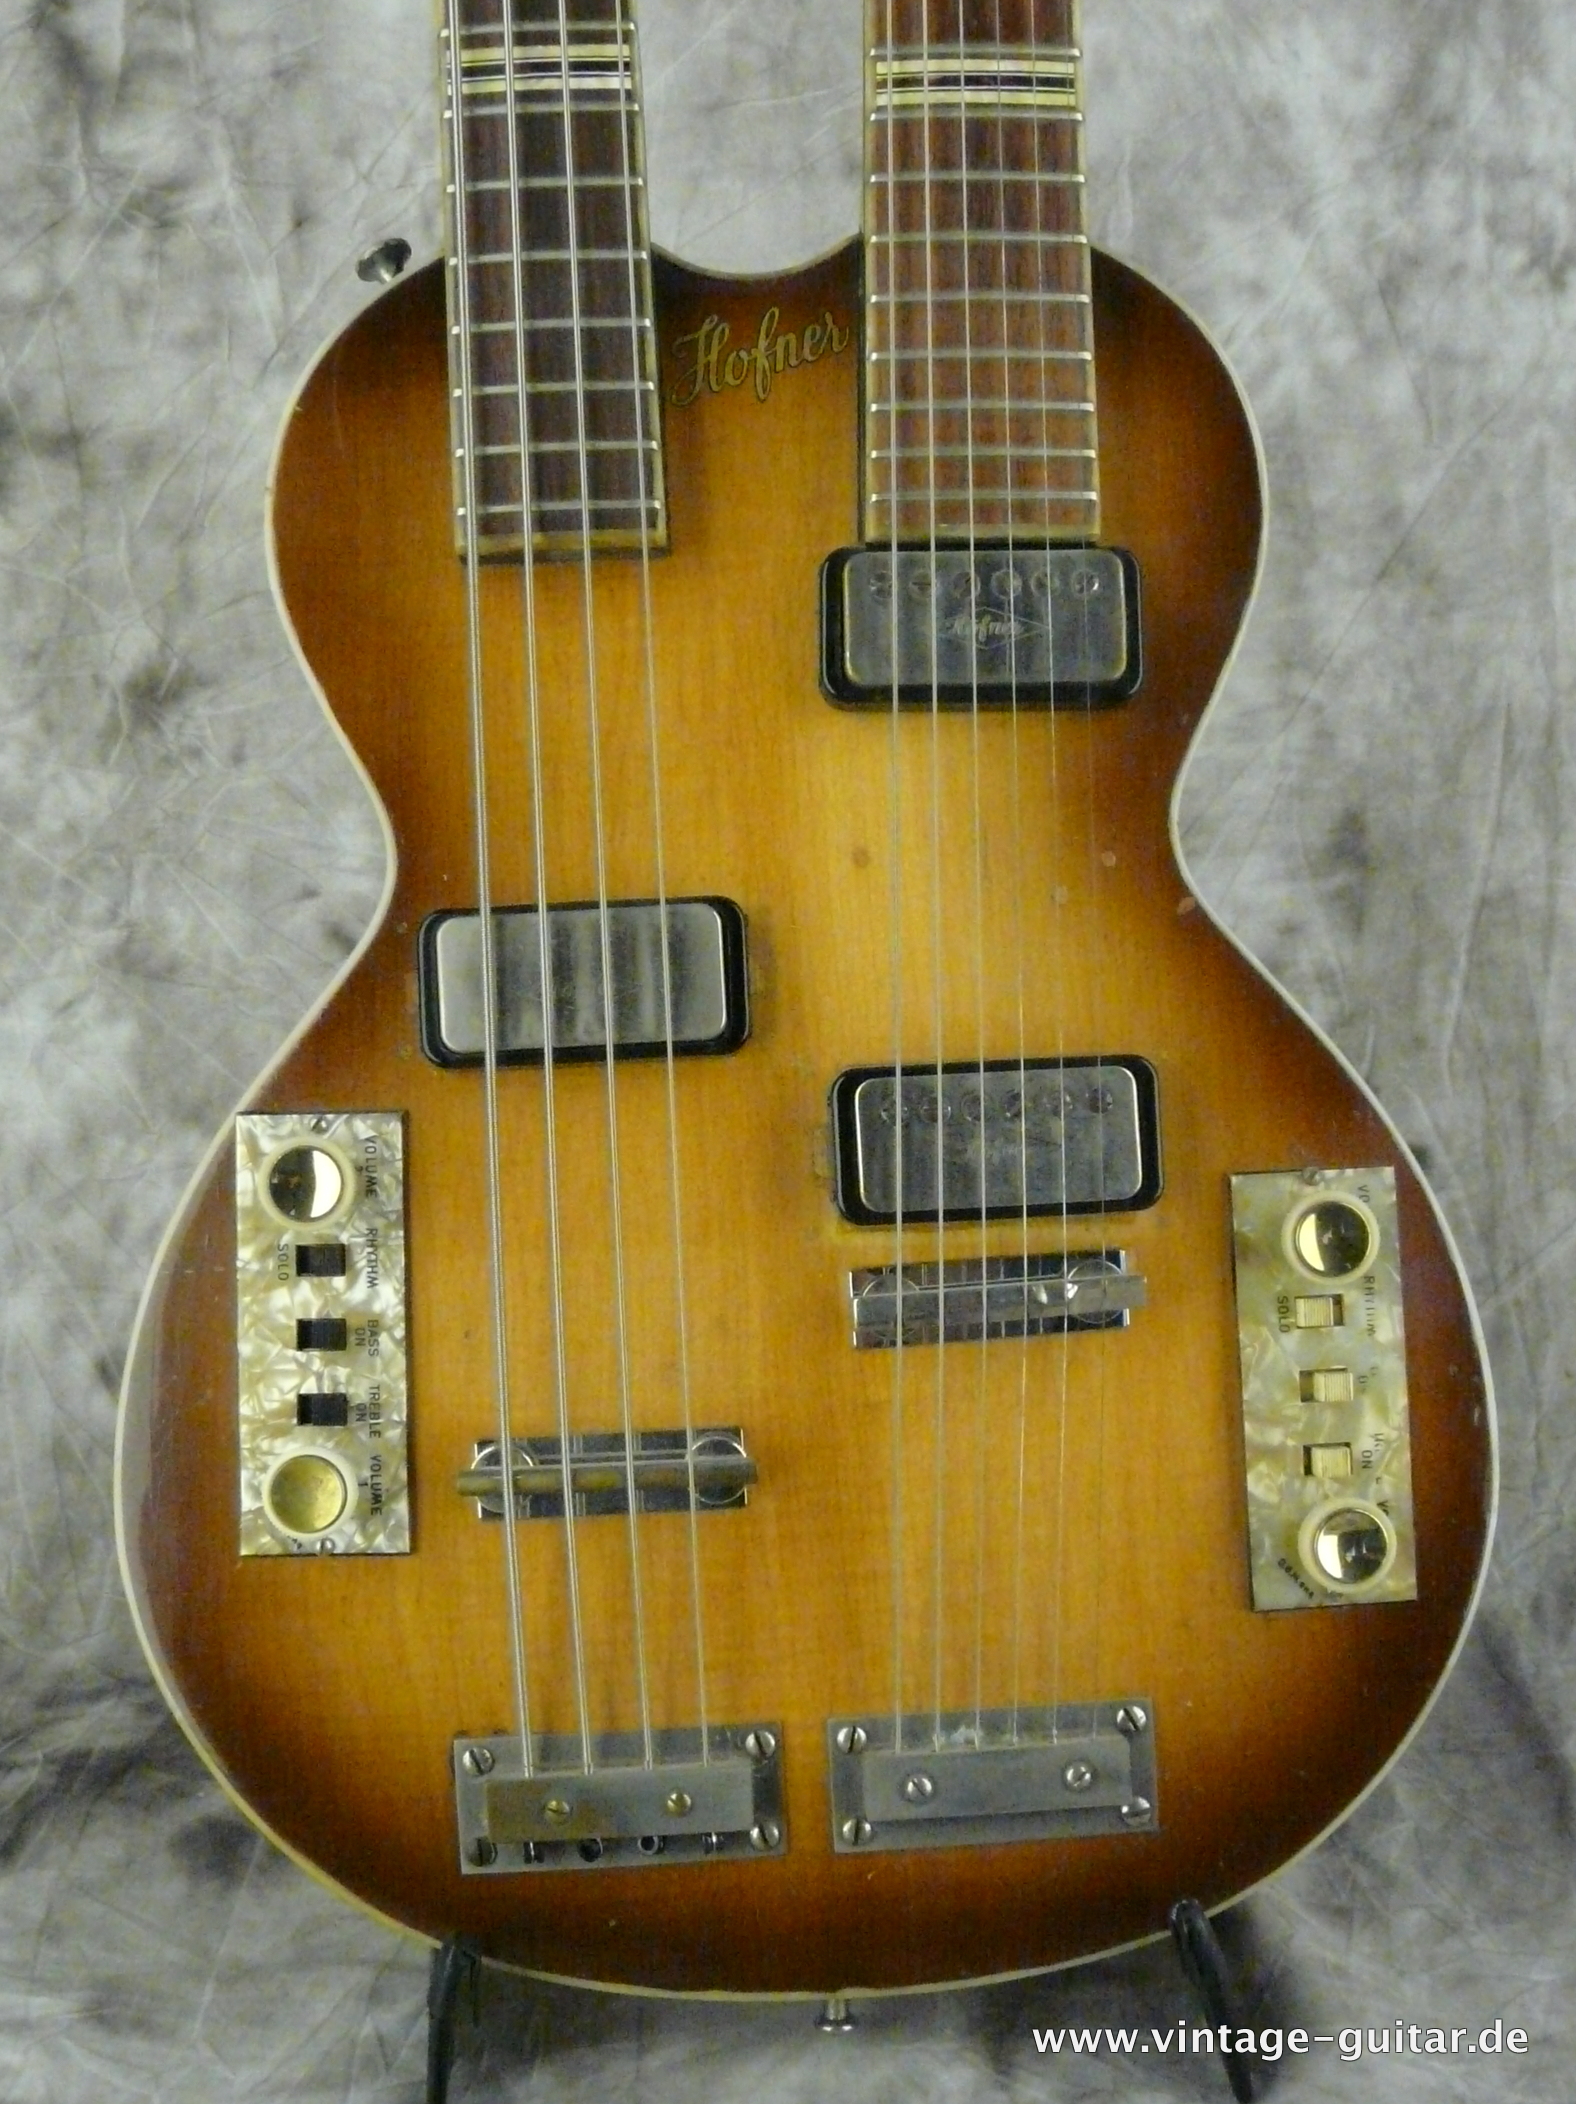 Hofner-Double-Neck-Guitar-and-Bass-Model-191-002.JPG